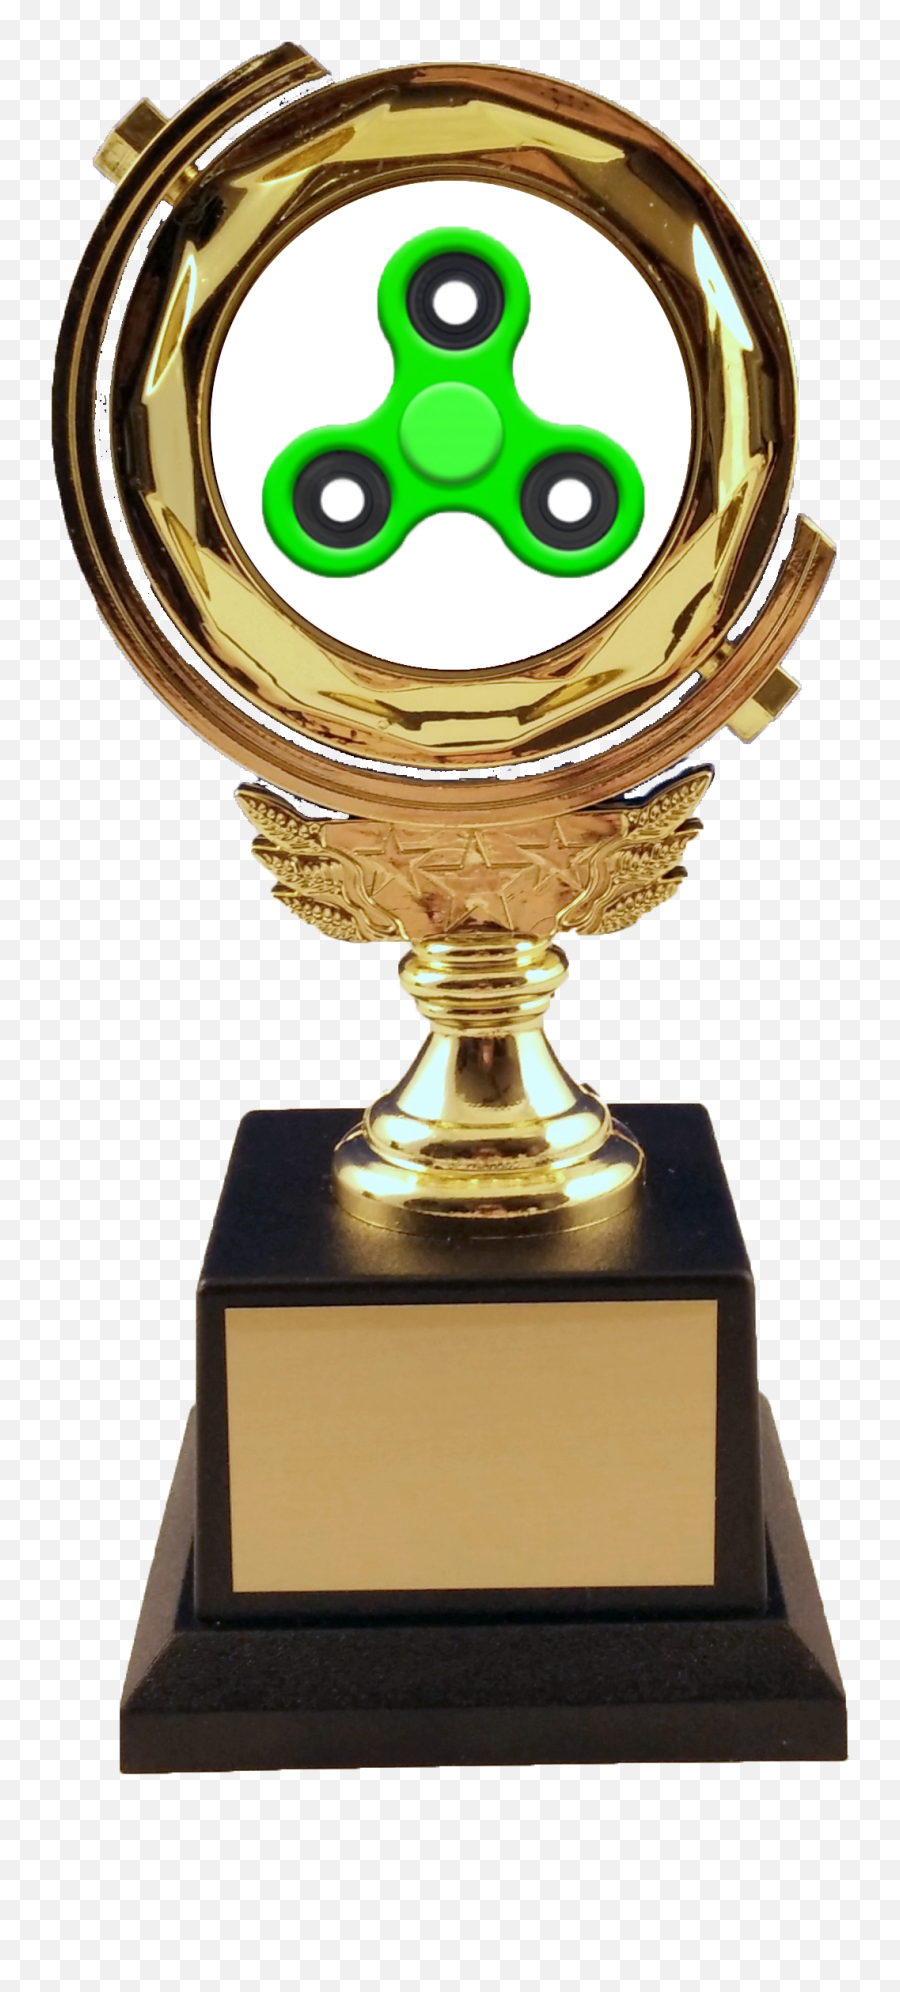 The Spinning Fidget Spinner Trophy - Trophy Emoji,Emoji Fidget Spinner